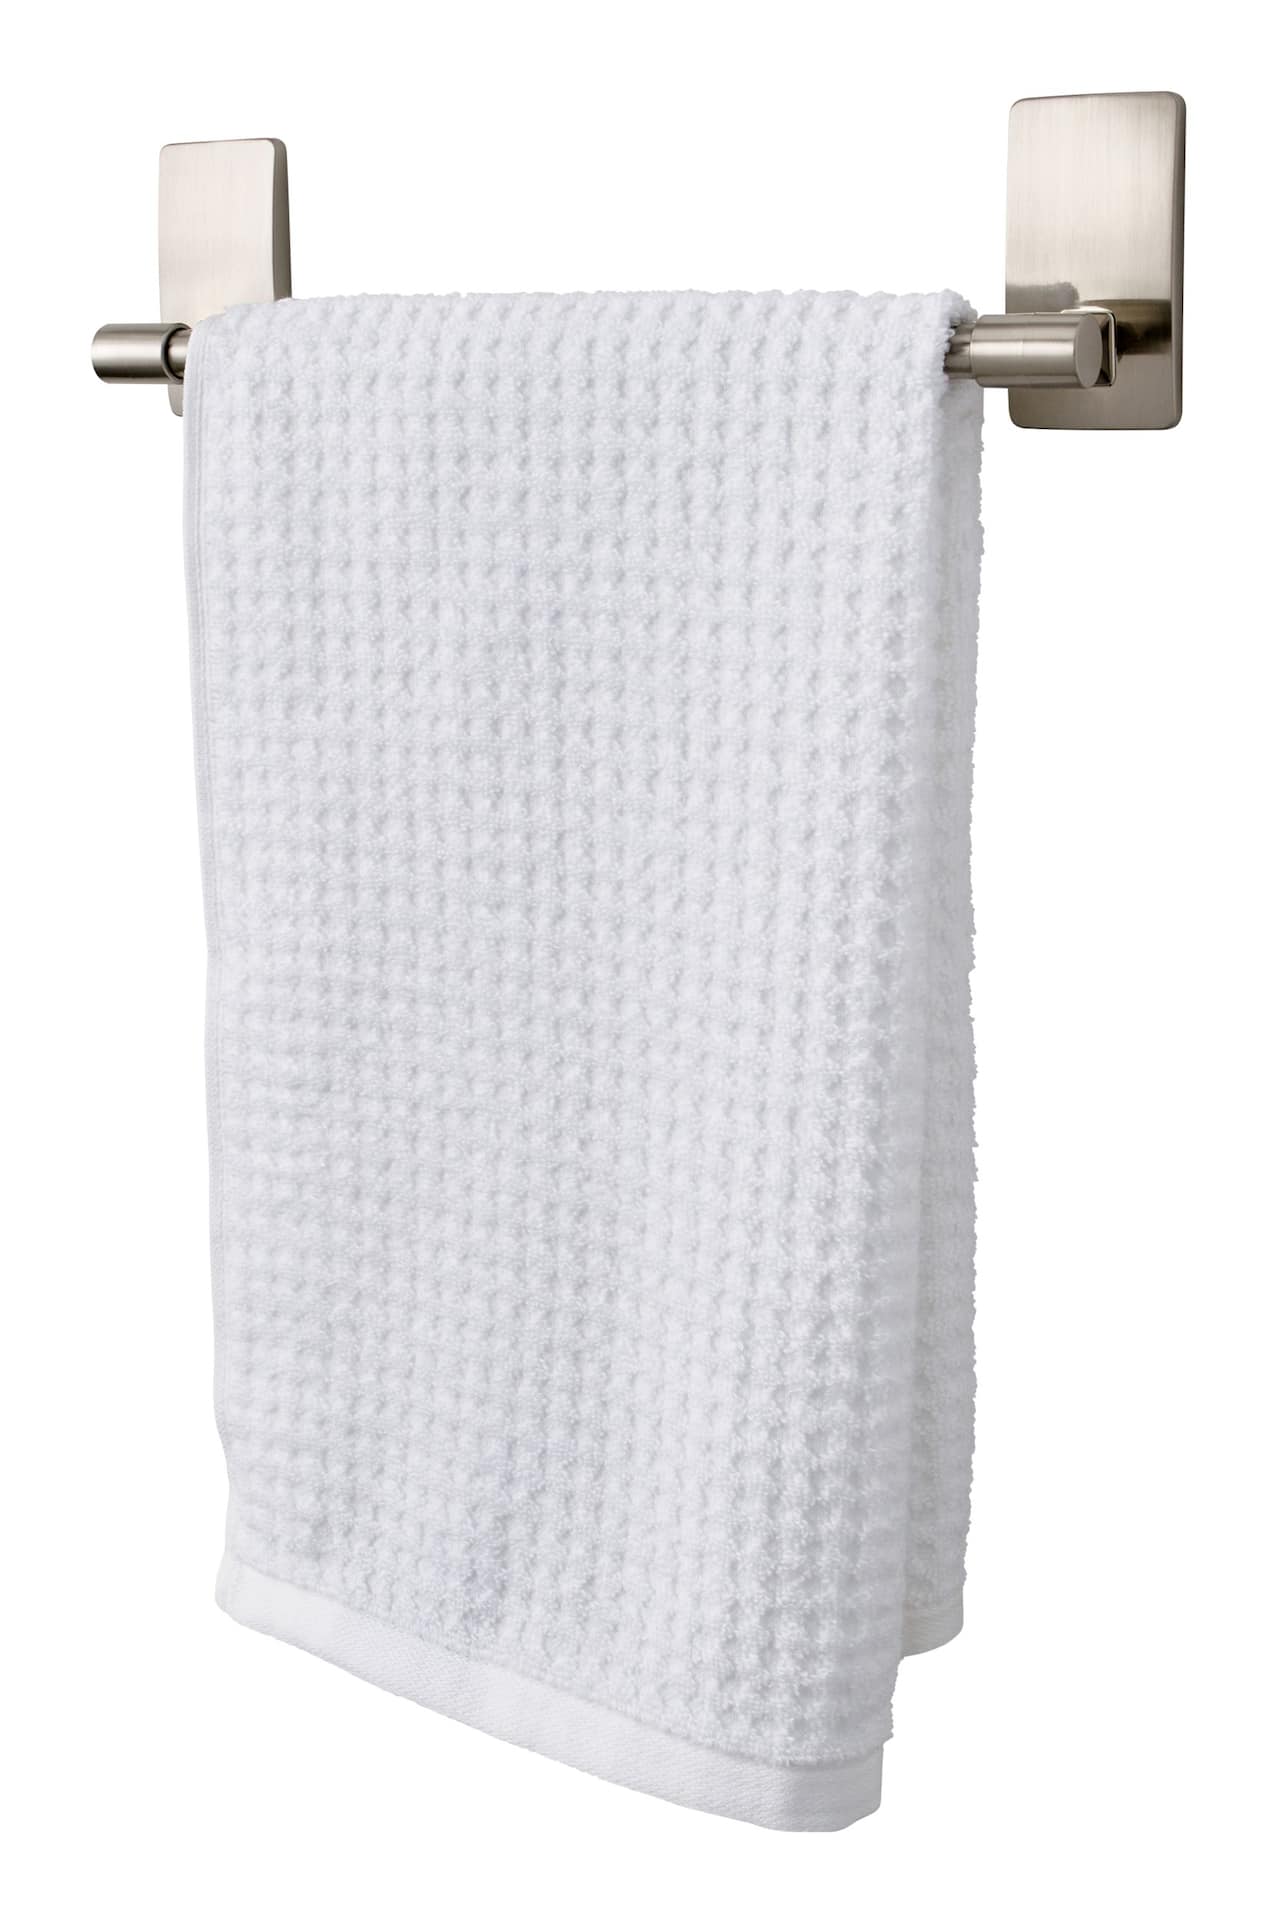 Towel Racks, Towel Bars & Towel Shelves